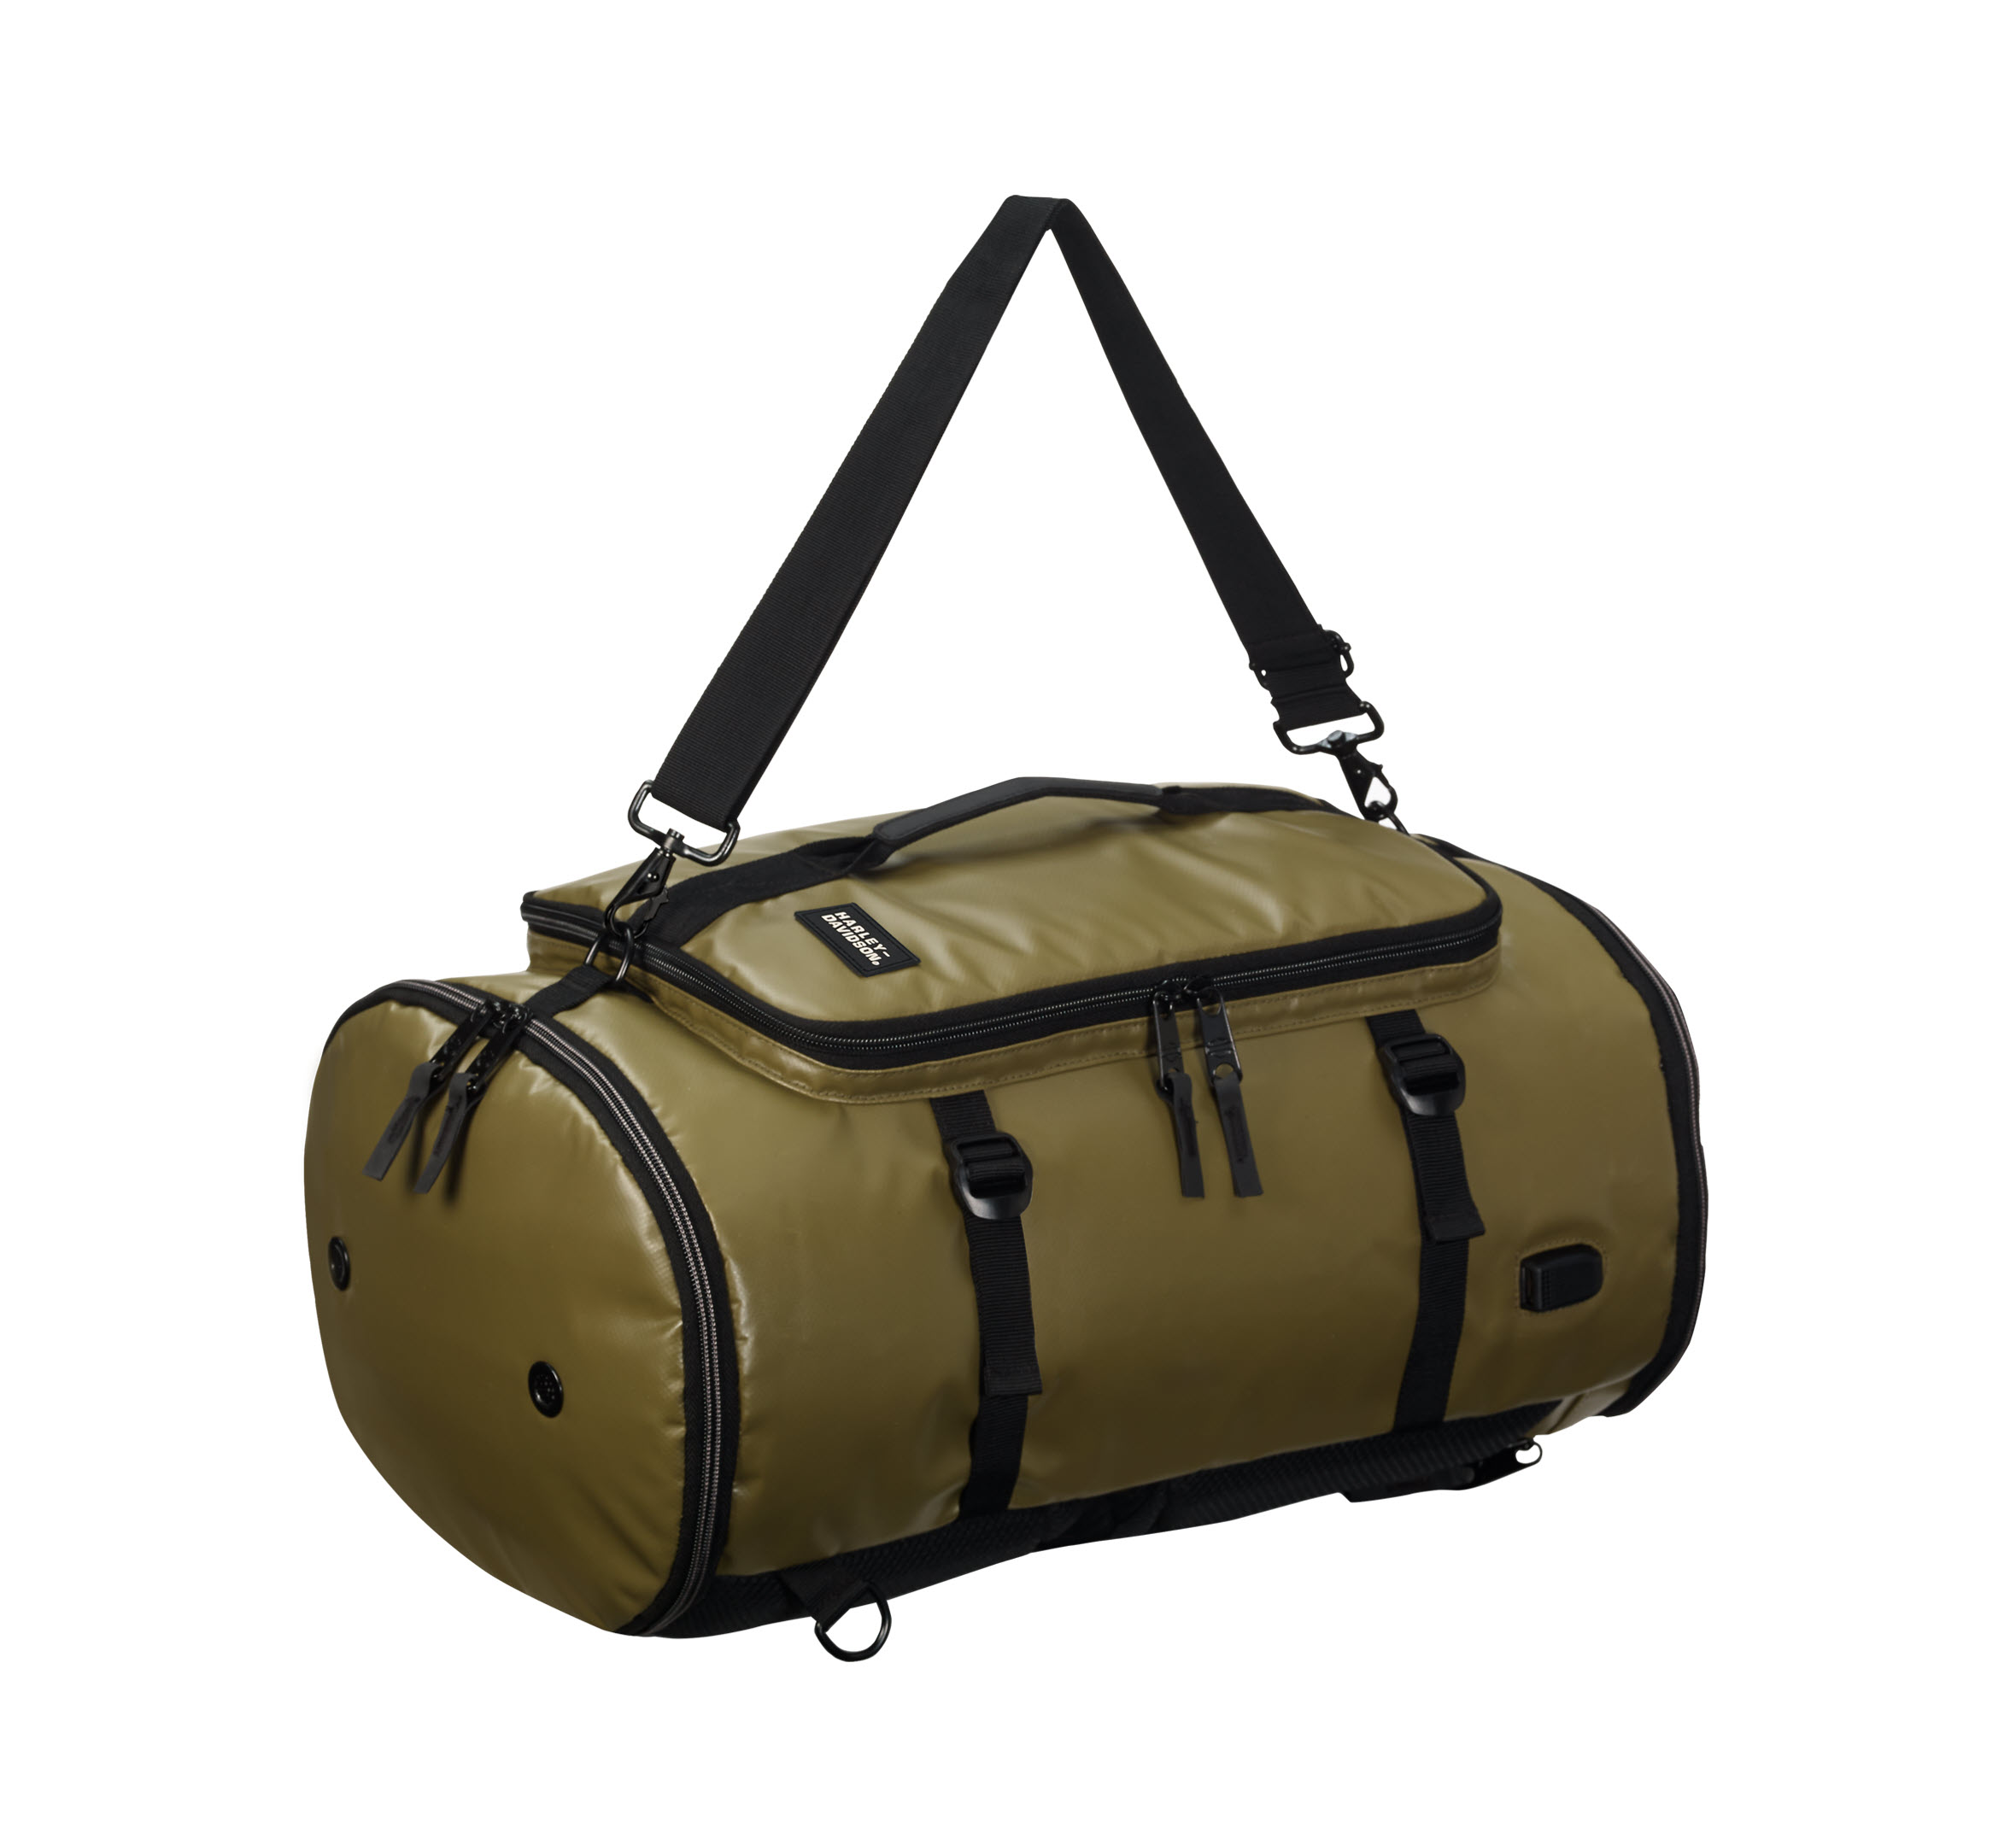 Hybrid Travel Duffel Backpack with USB Port & Hideaway Backpack